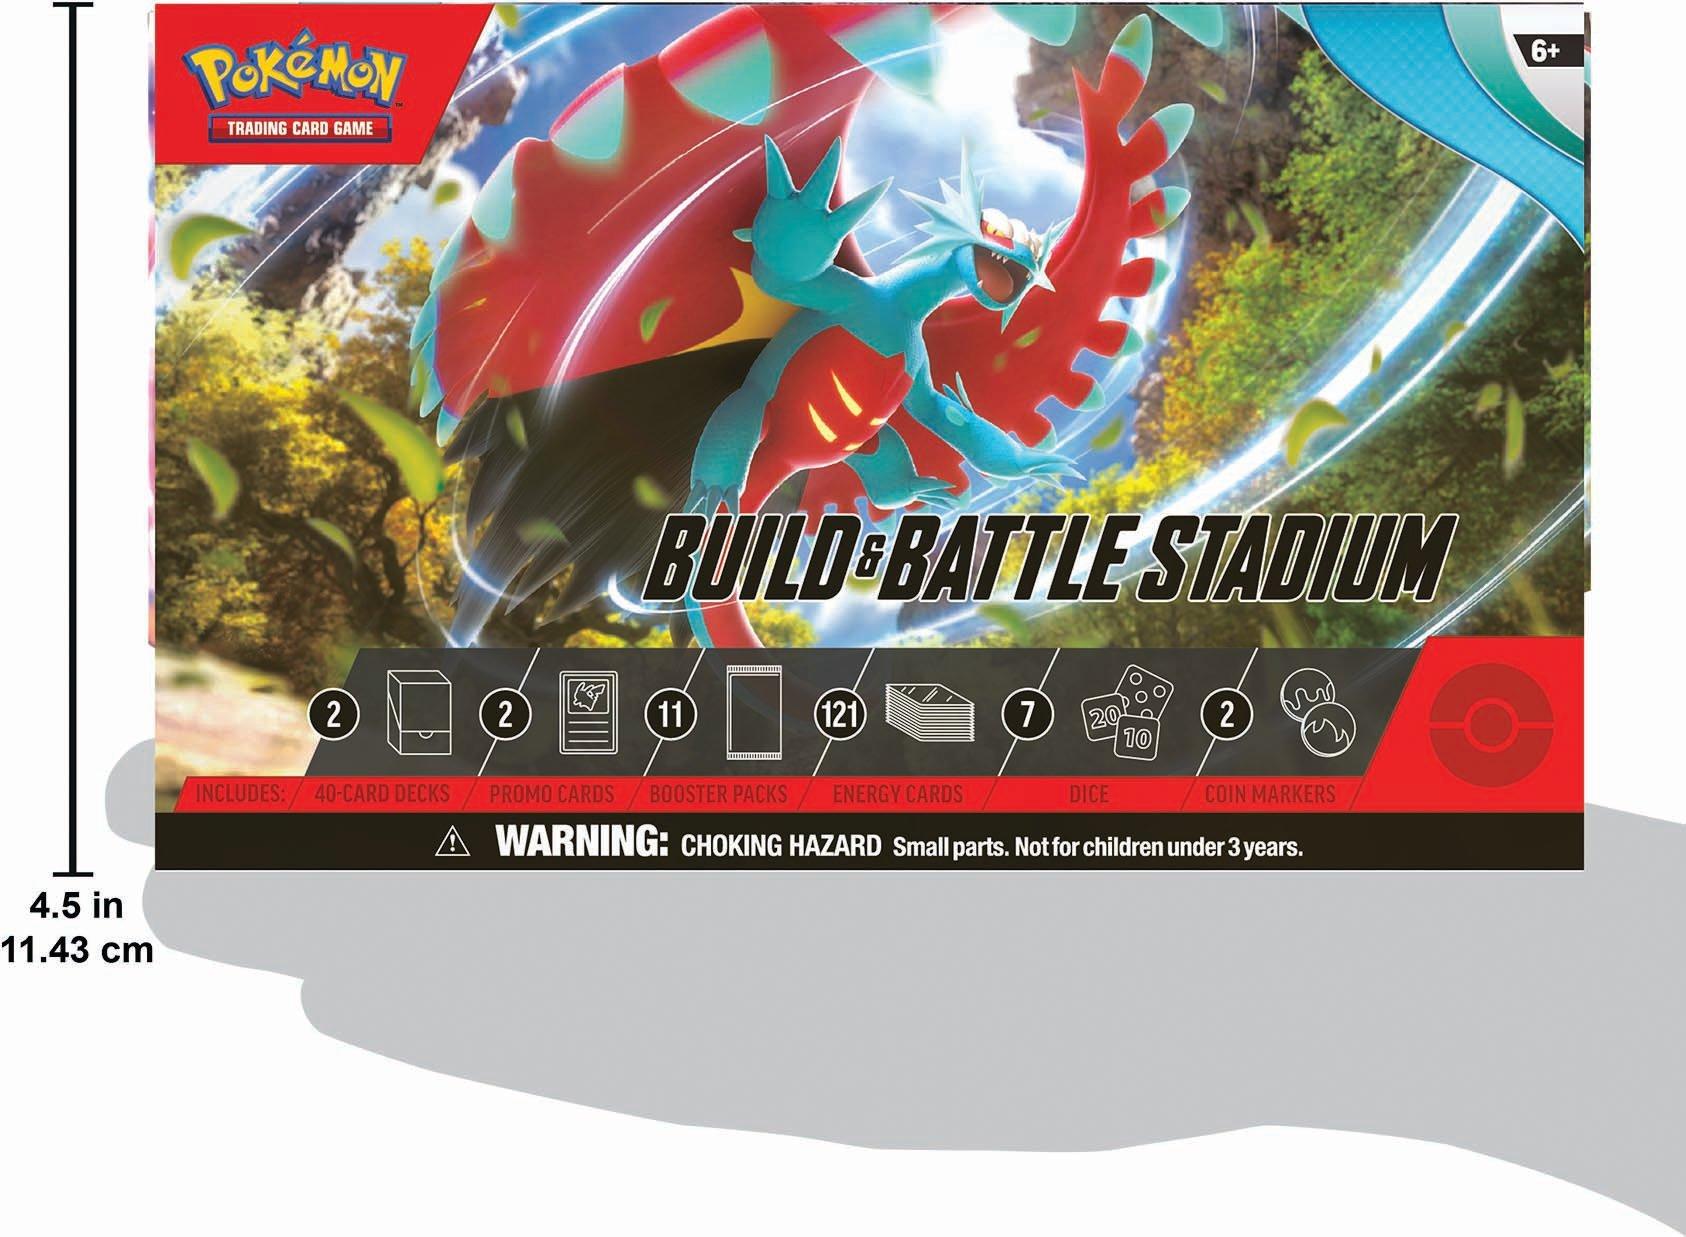 Pokémon Trading Card Game, Stadium 2 Joining Nintendo Switch